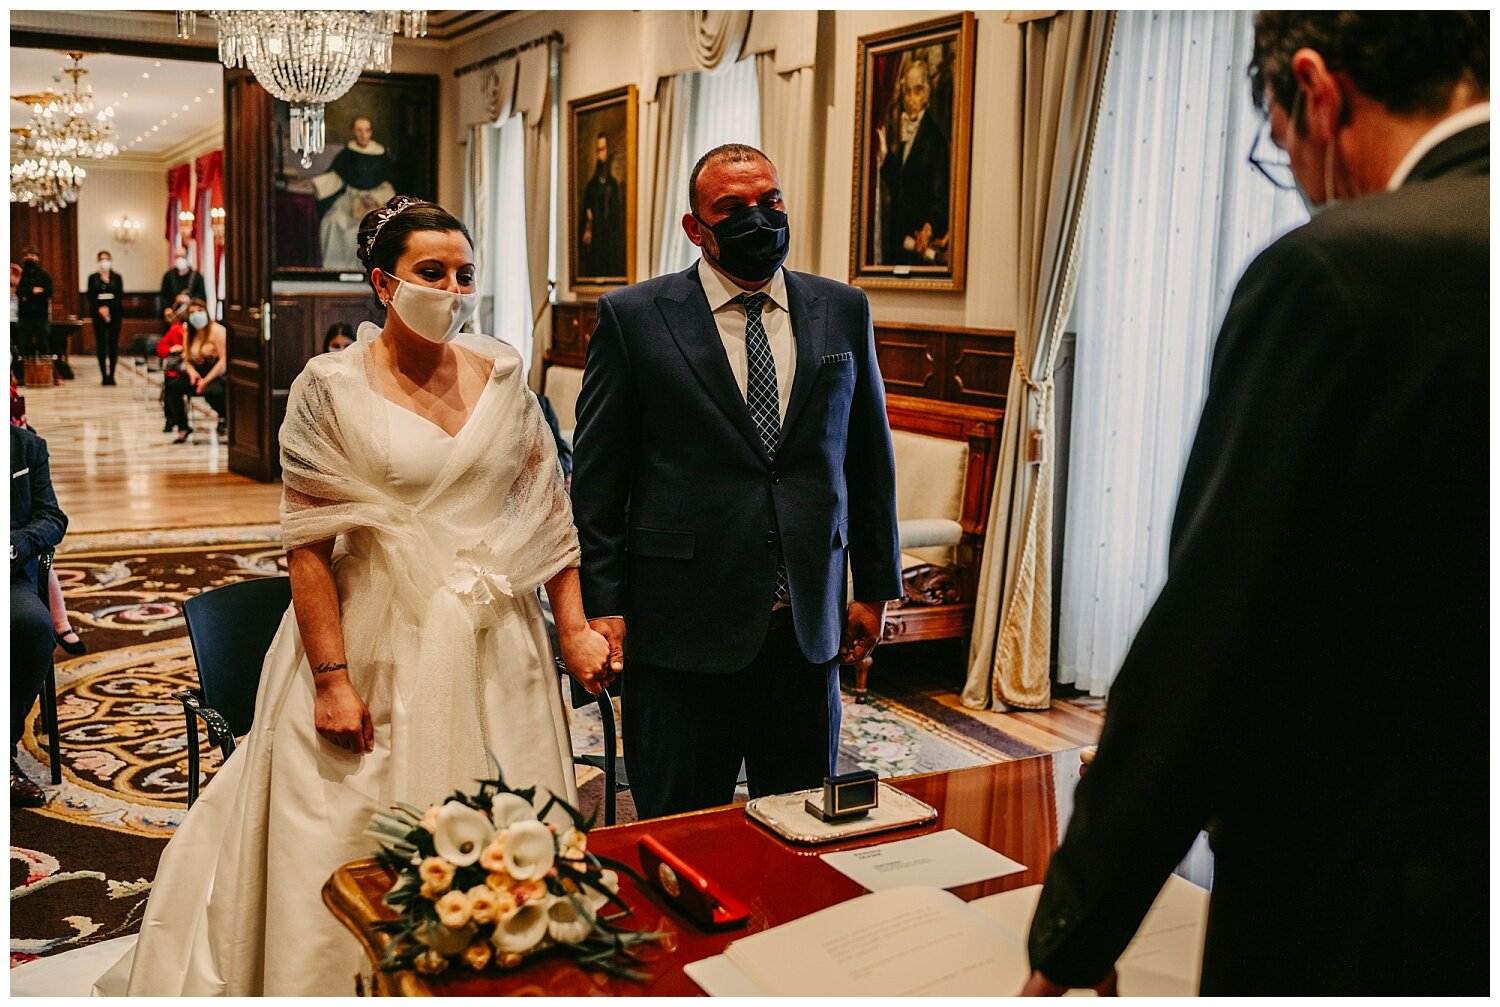 Fotografo de bodas Vitoria Boda en parador de argomaniz Boda en ayuntamiento devitoria (45).jpg